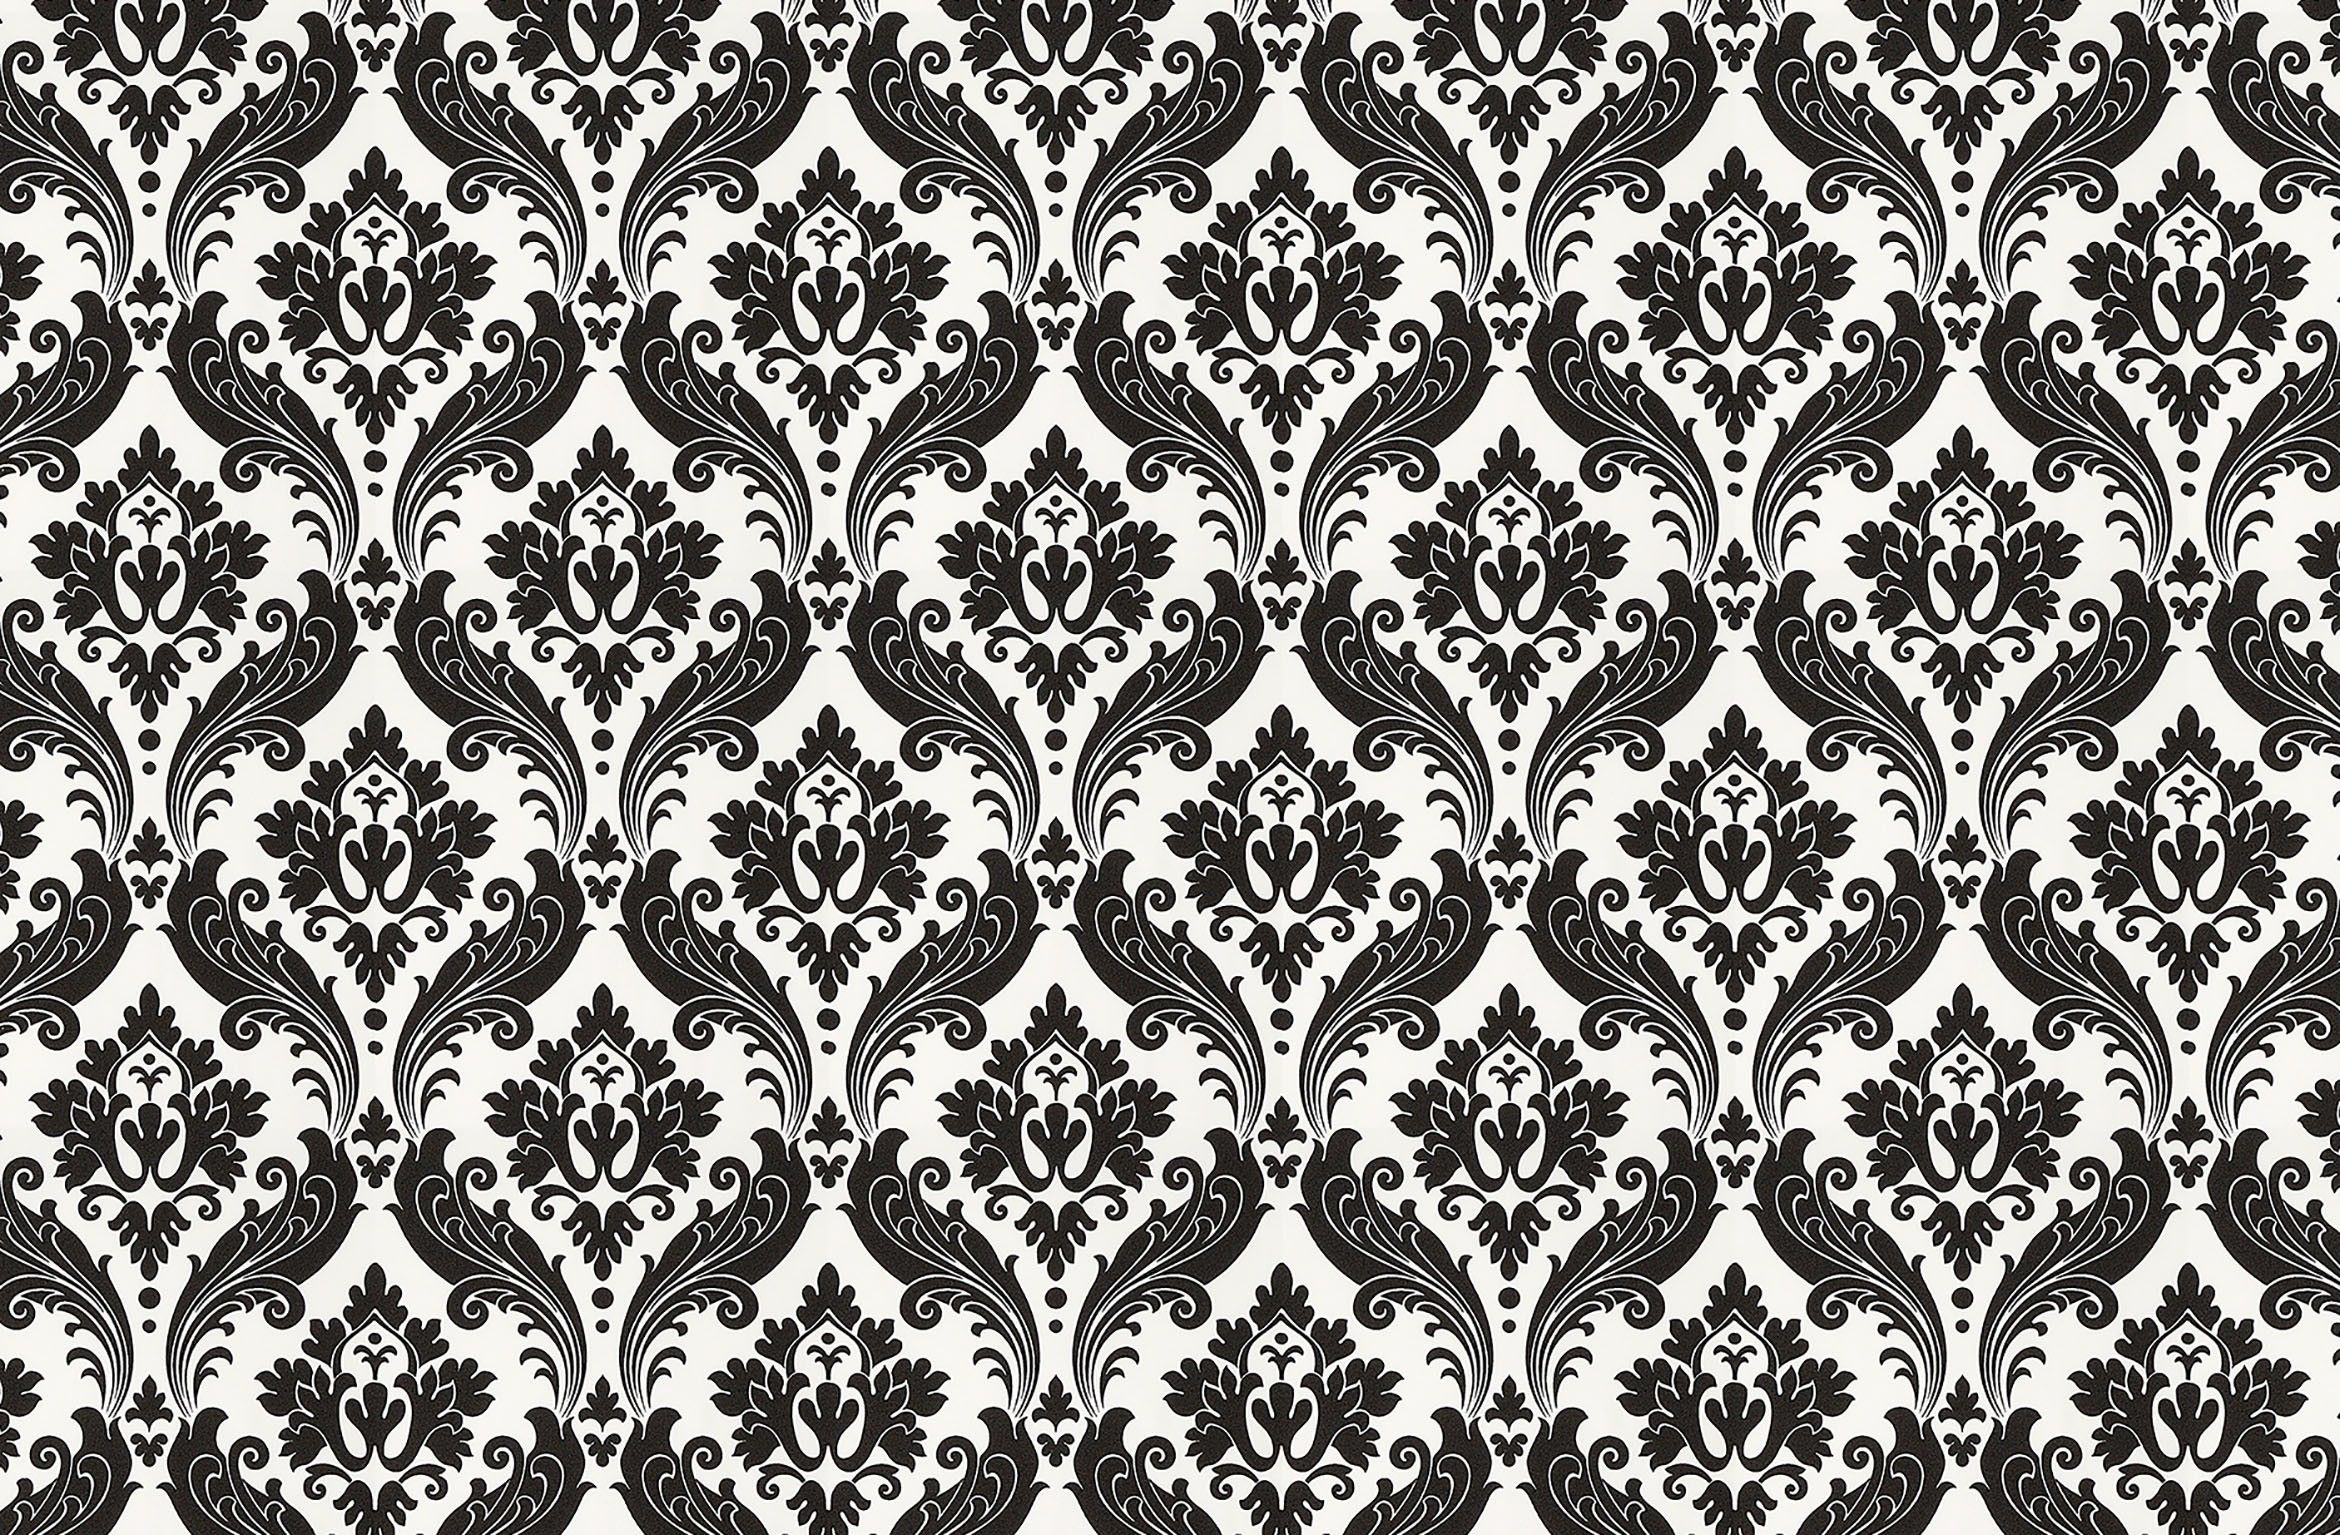 Wallpaper.wiki Vintage Background Tumblr Black And White PIC